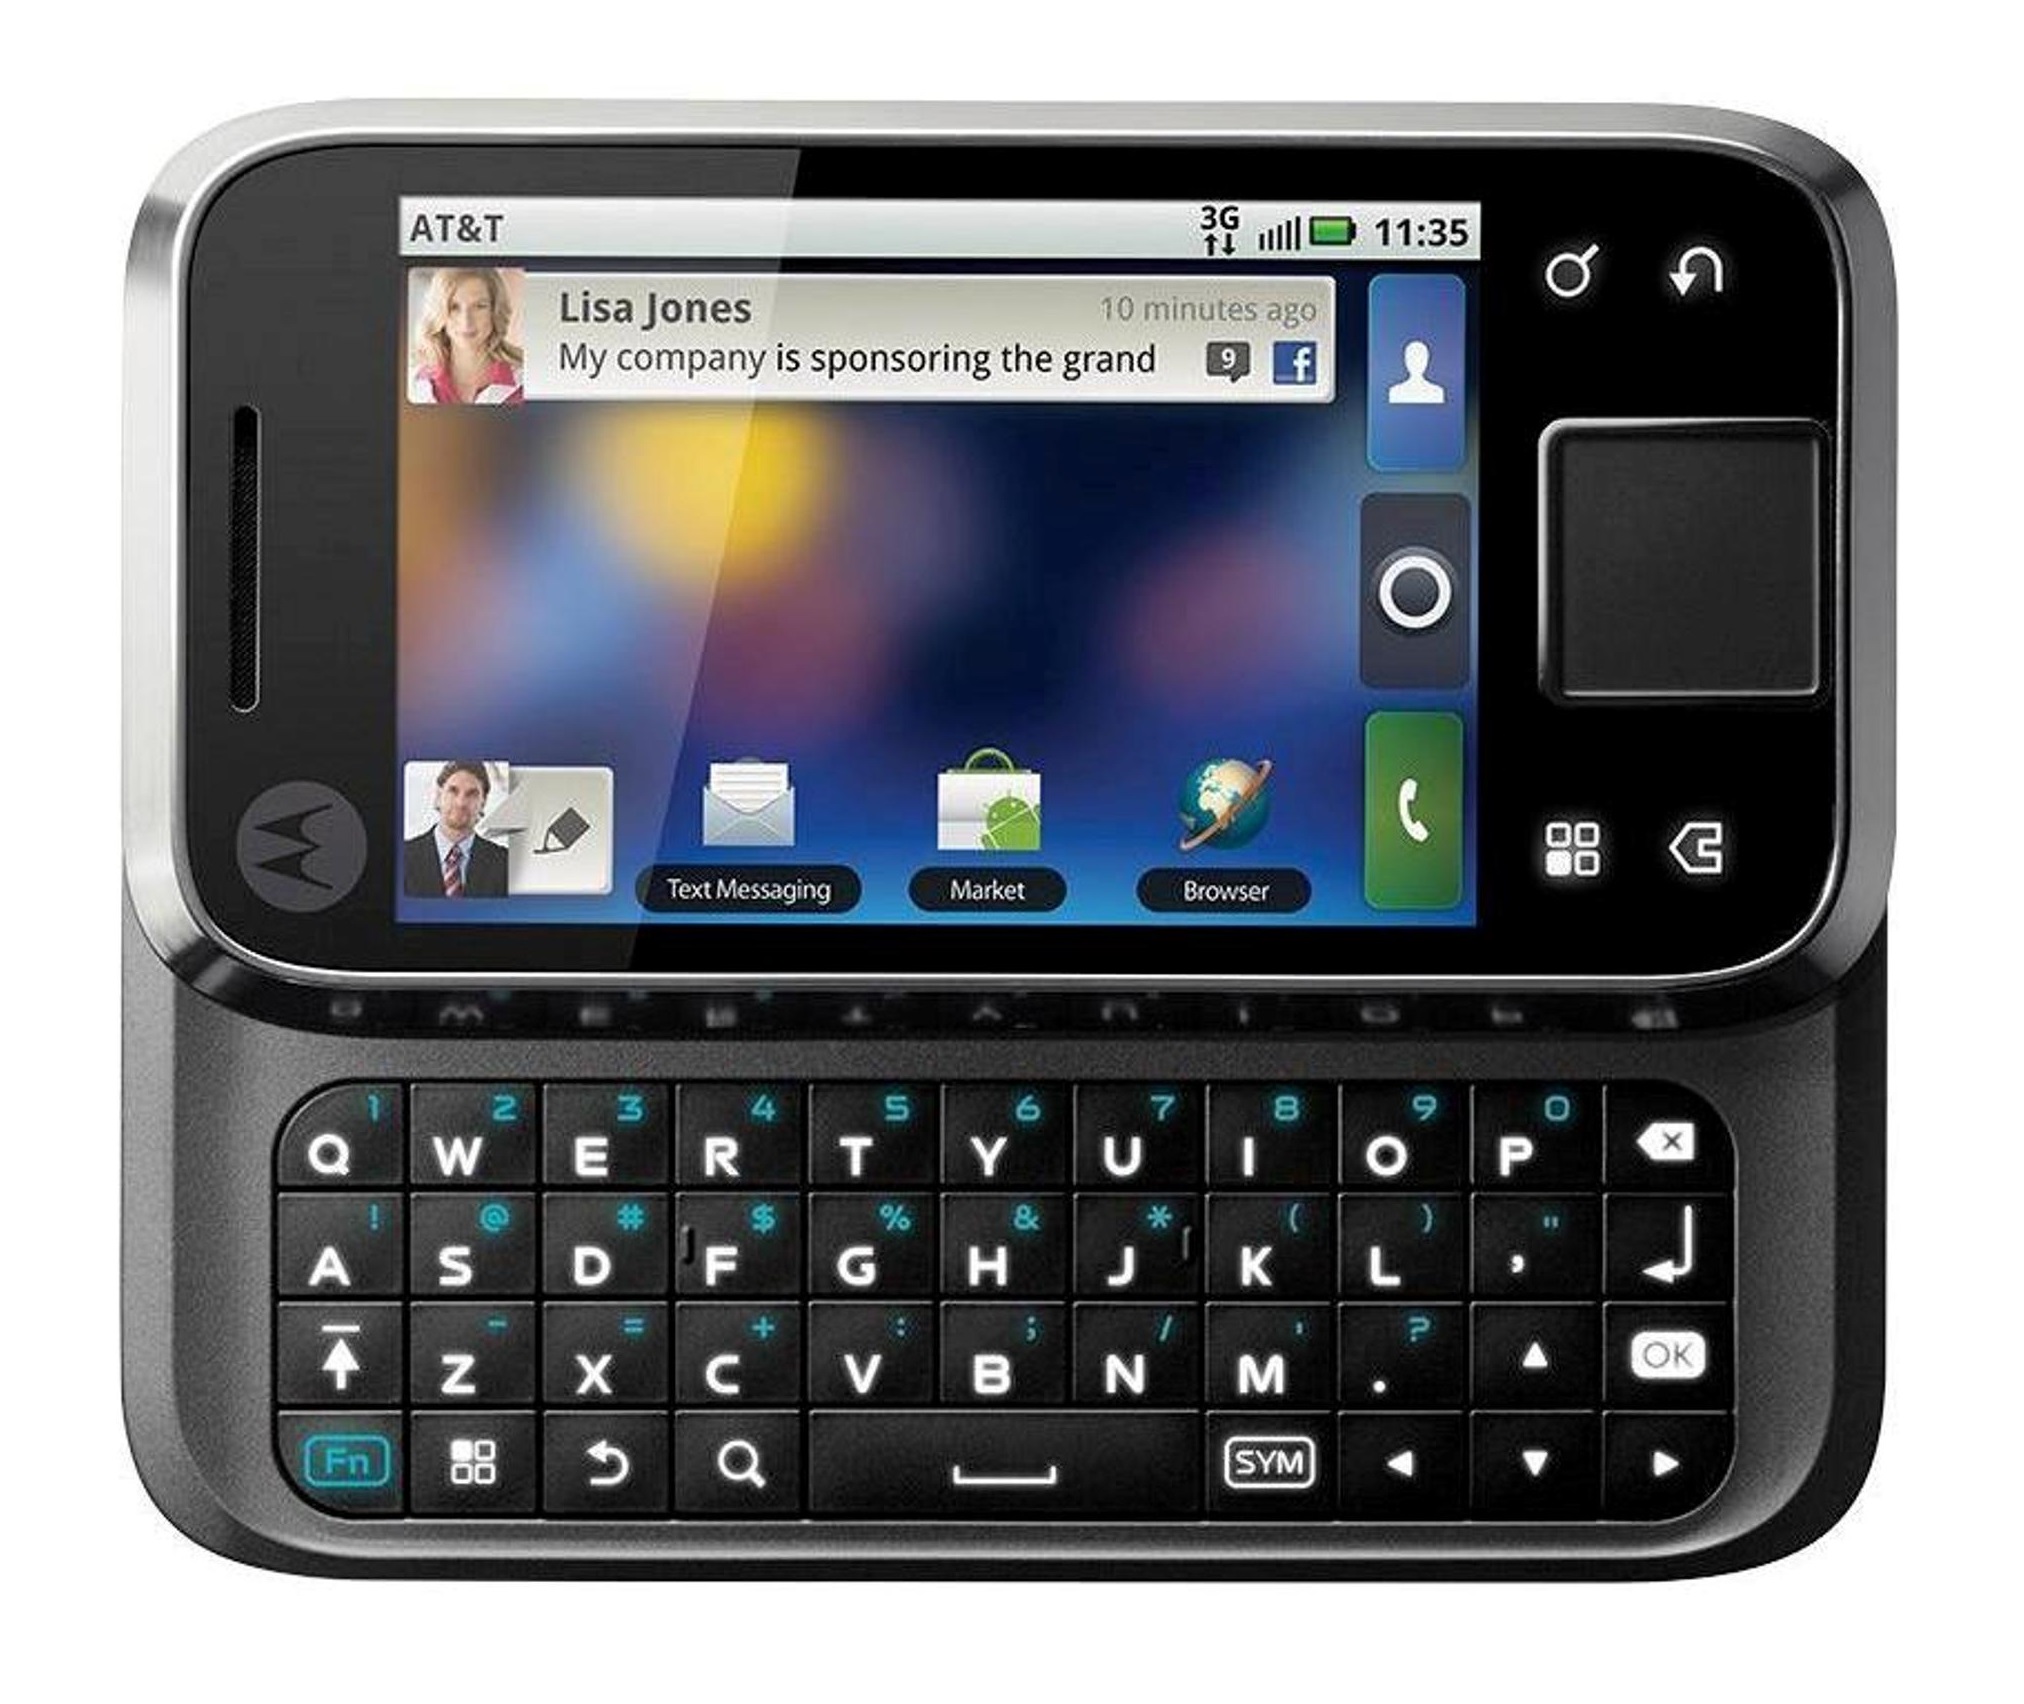 Motorola android phones t mobile